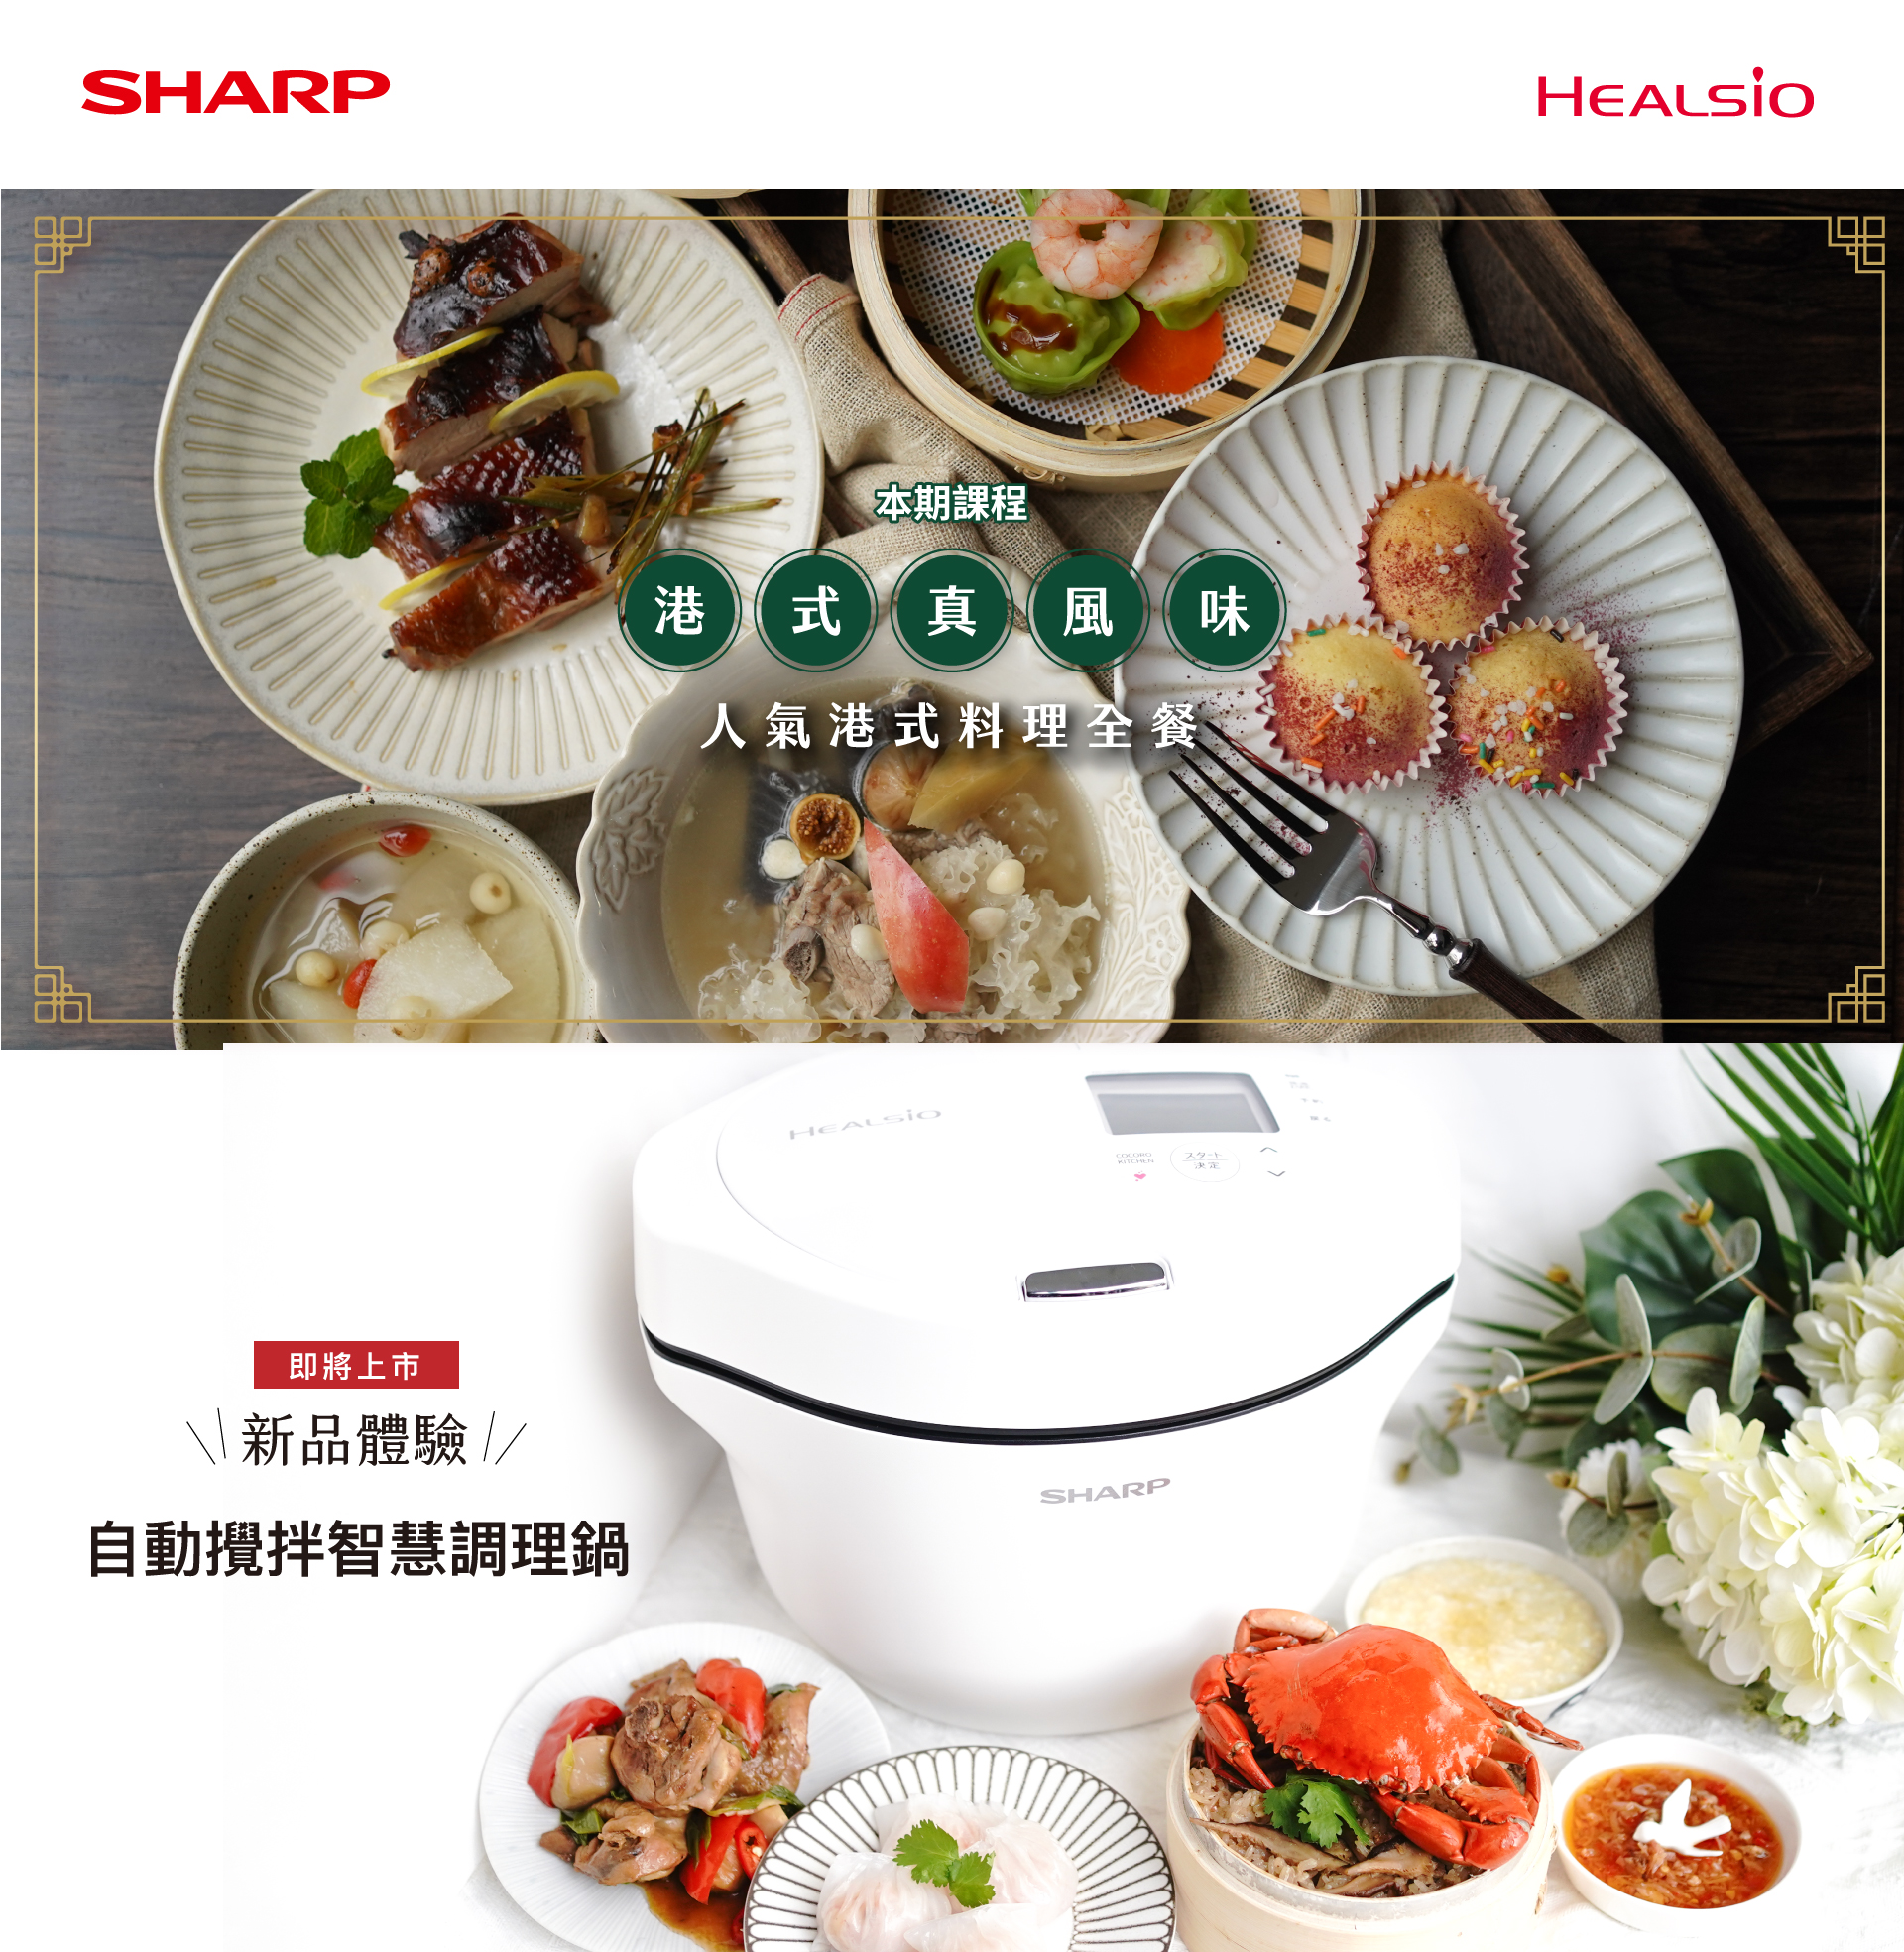 SHARP春季廚藝課程